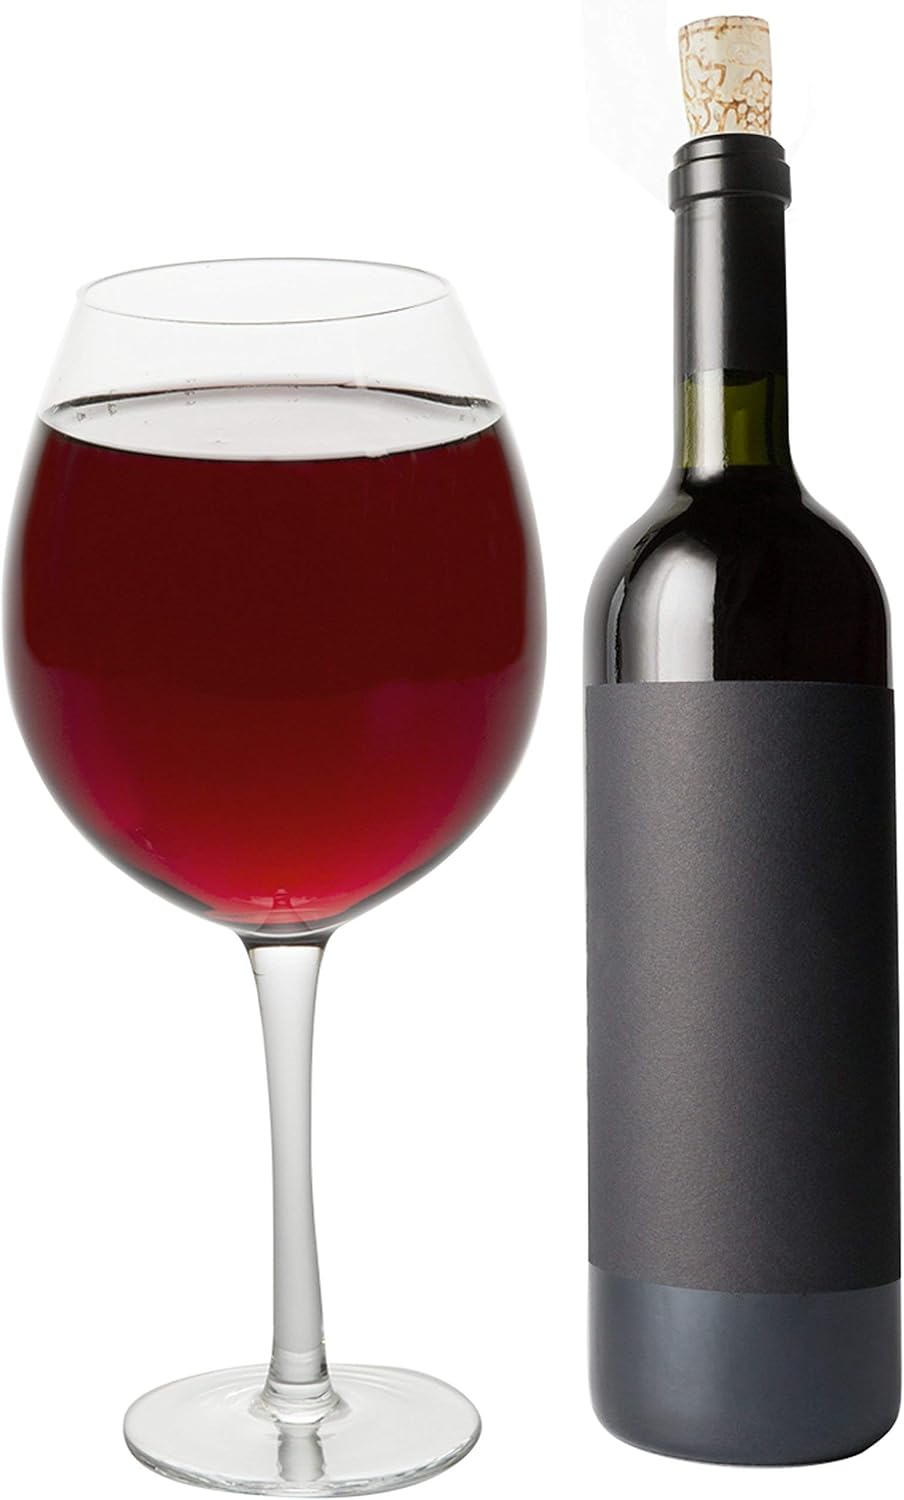 big wine glass with red wine inside